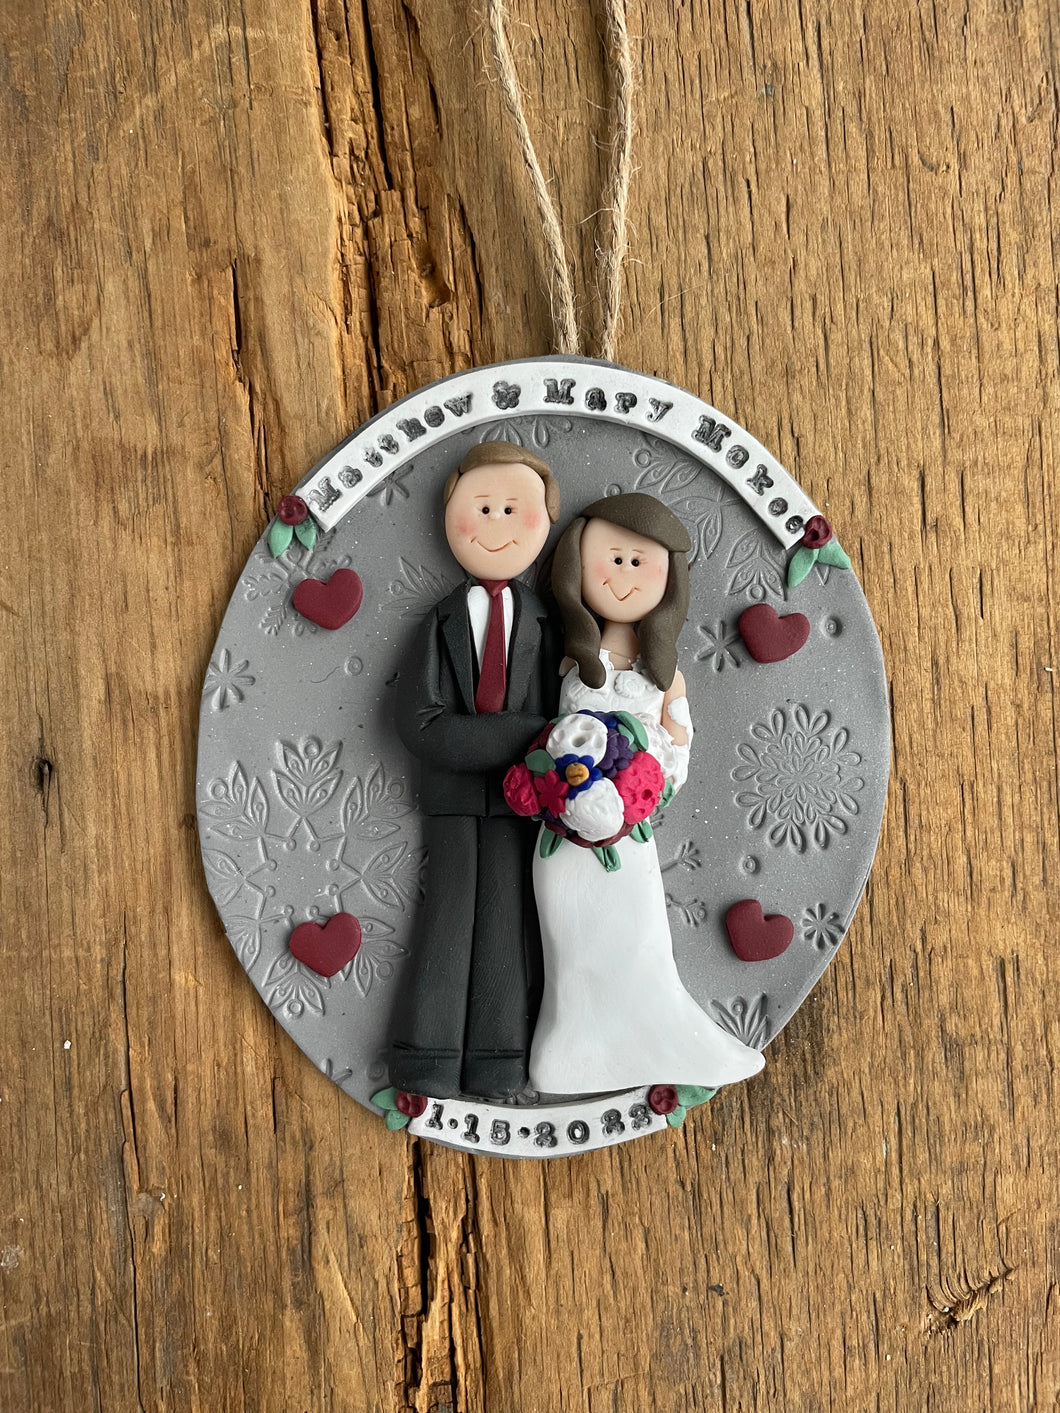 2 Member custom wedding ornament